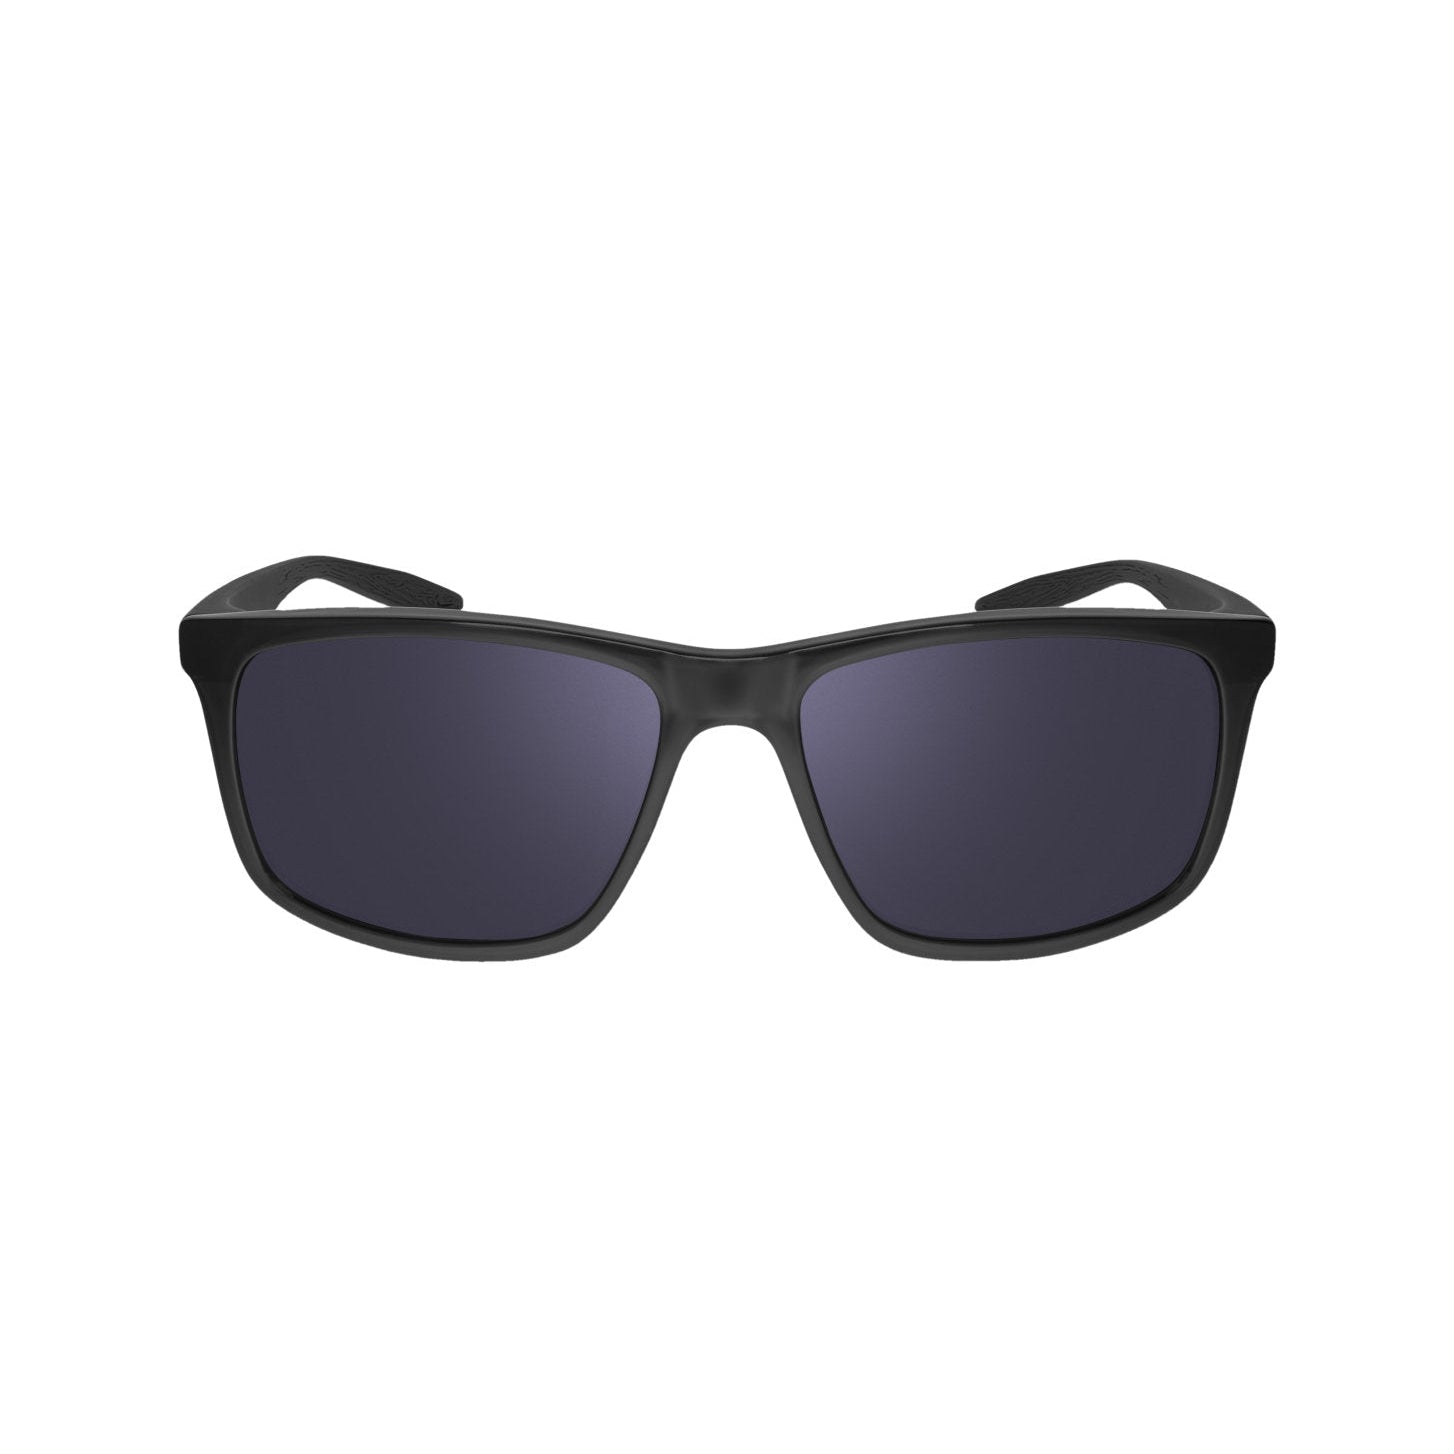 Nike Sunglasses Chaser Ascent Black/ D.Grey Lens